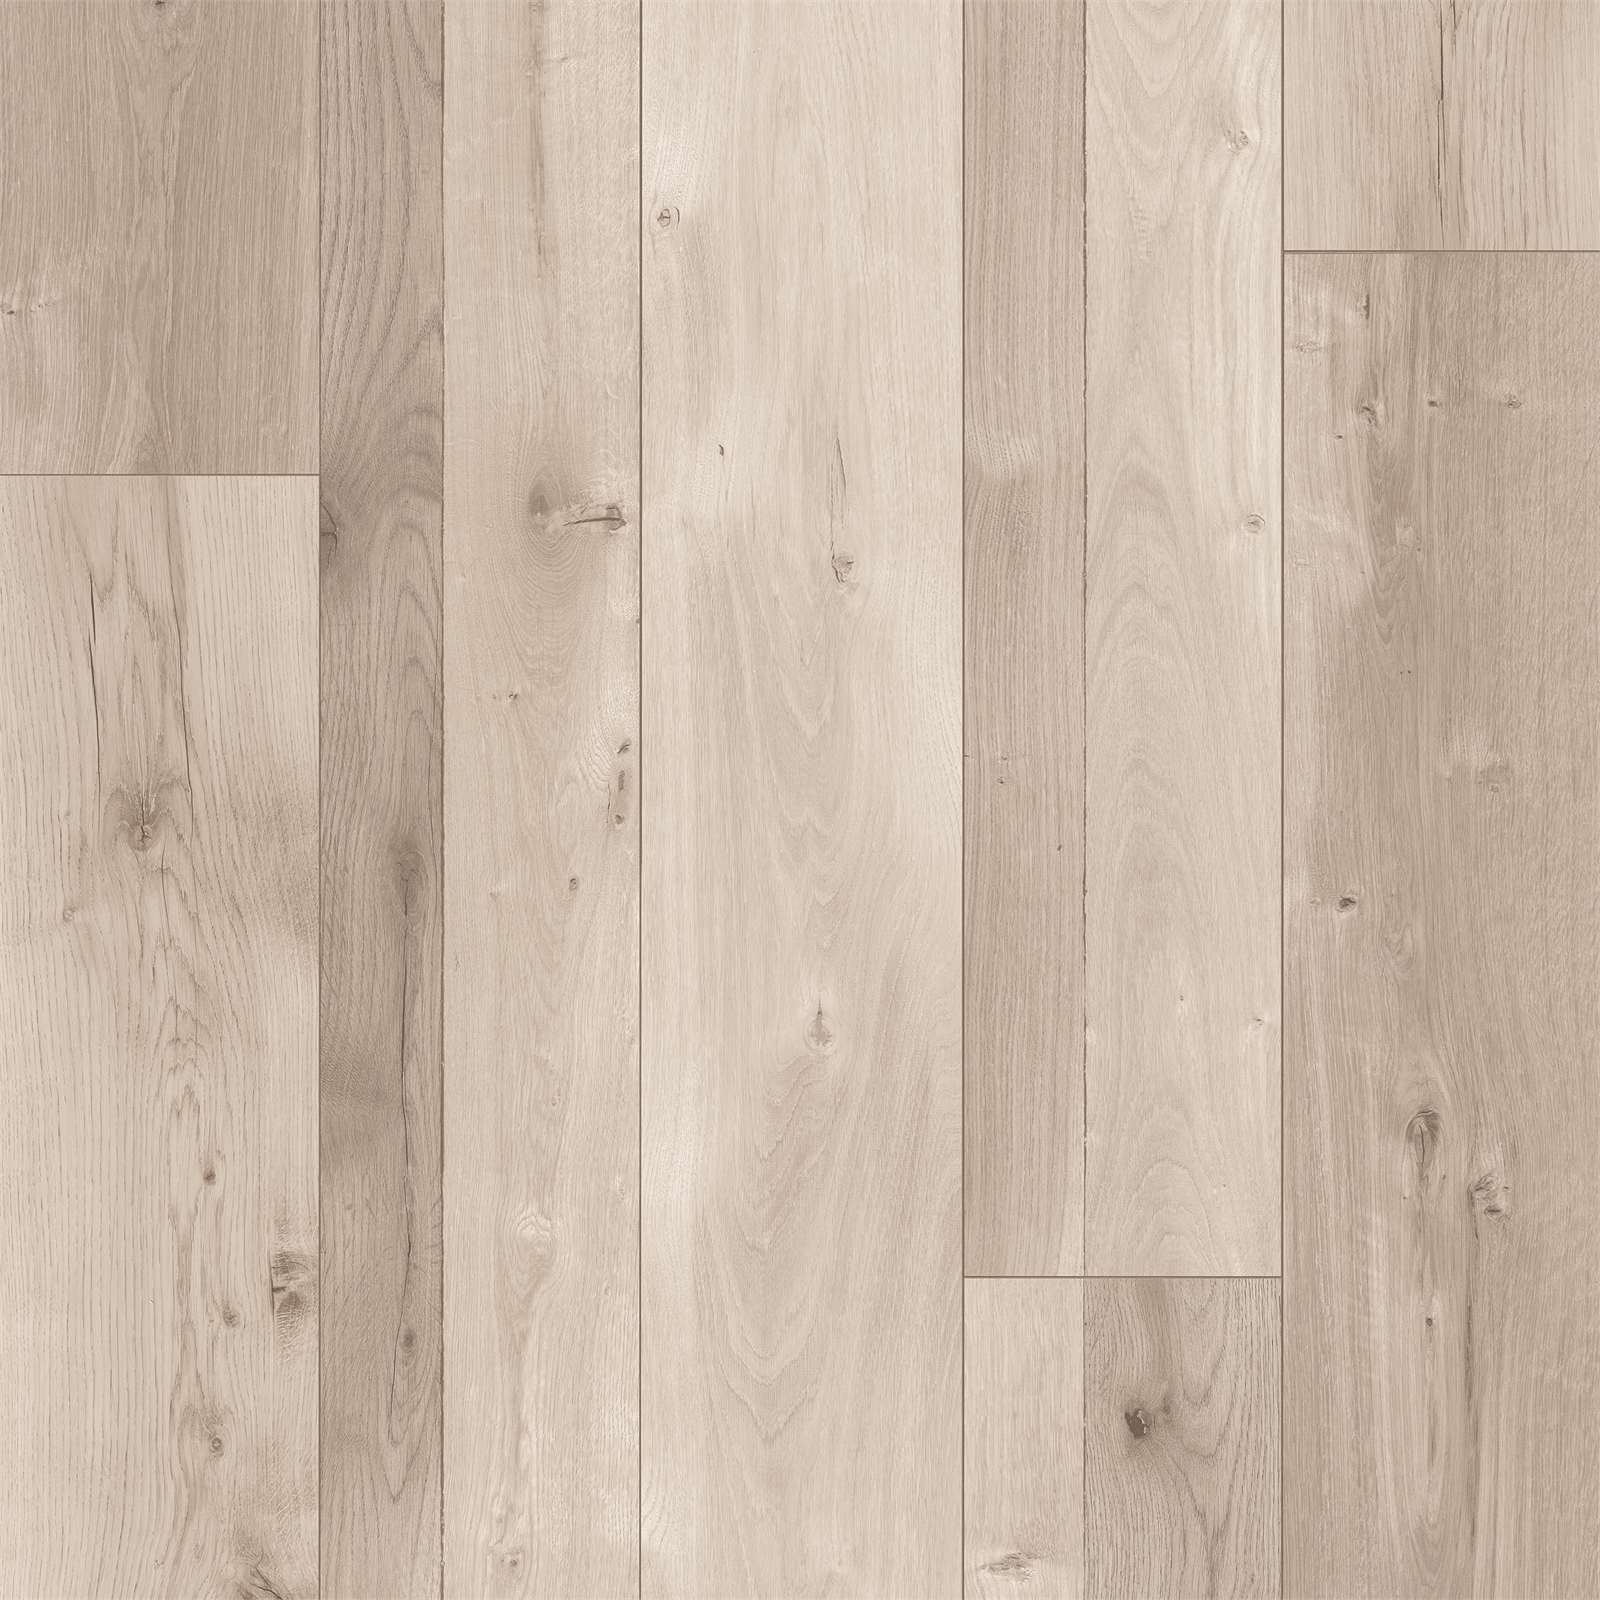 Formica 8mm 2.4sqm Urban Styled Oak Laminate Flooring